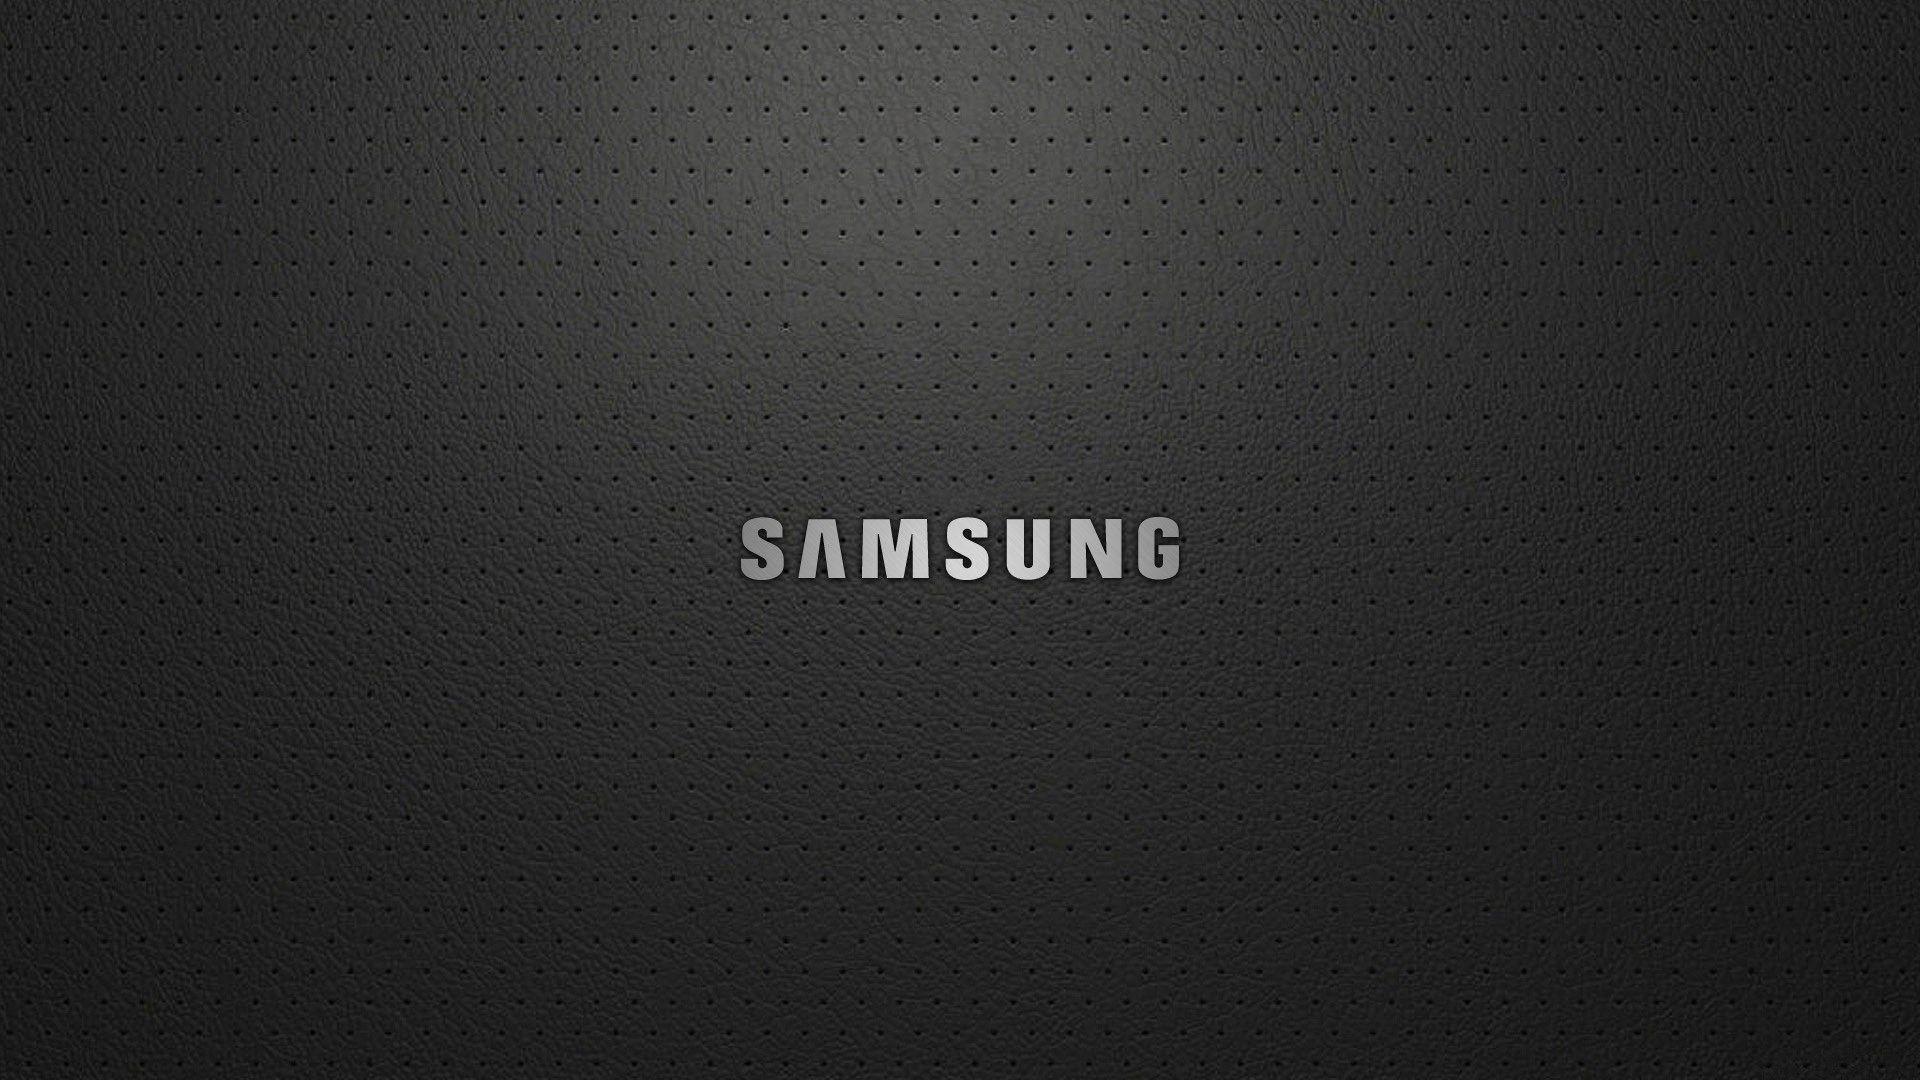 Samsung Tech Logo - samsung logo high resolution wallpapers | Poze De Fundalnn ...